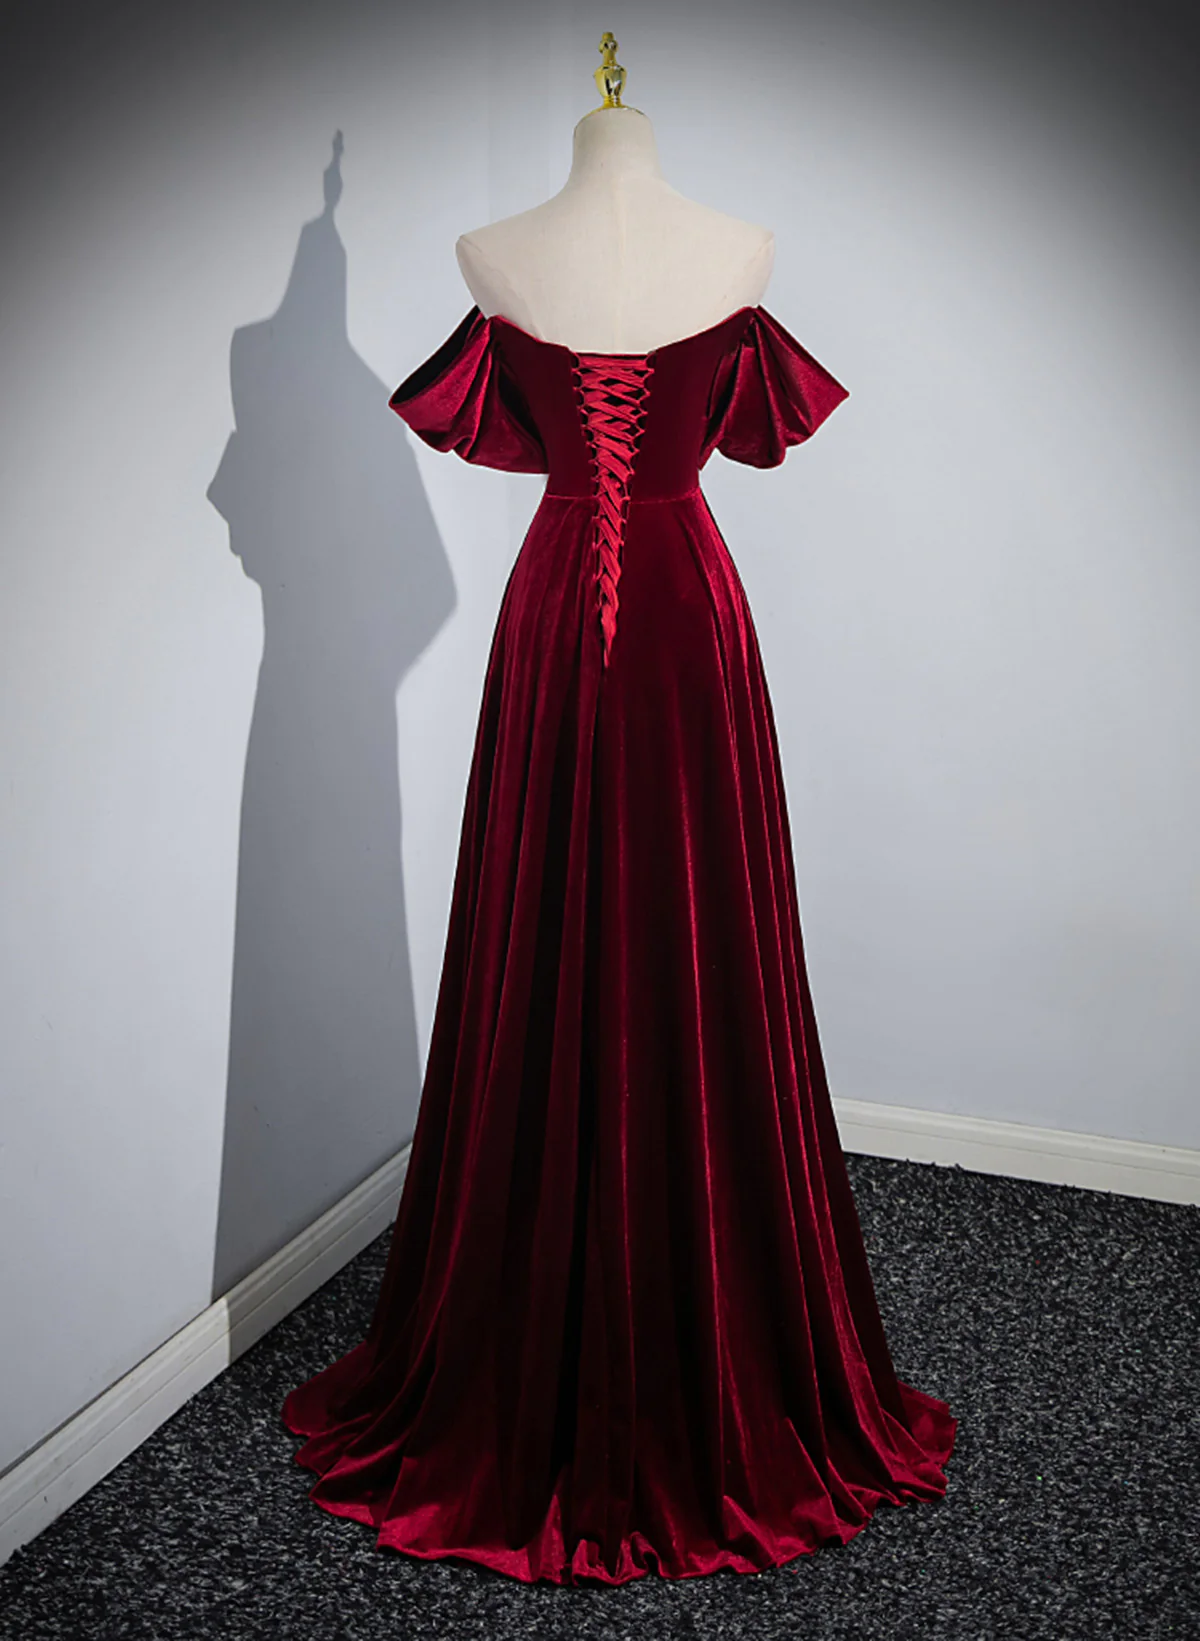 strapless Dark Red gathers Long Prom Dress A line Erevening Dress SP27